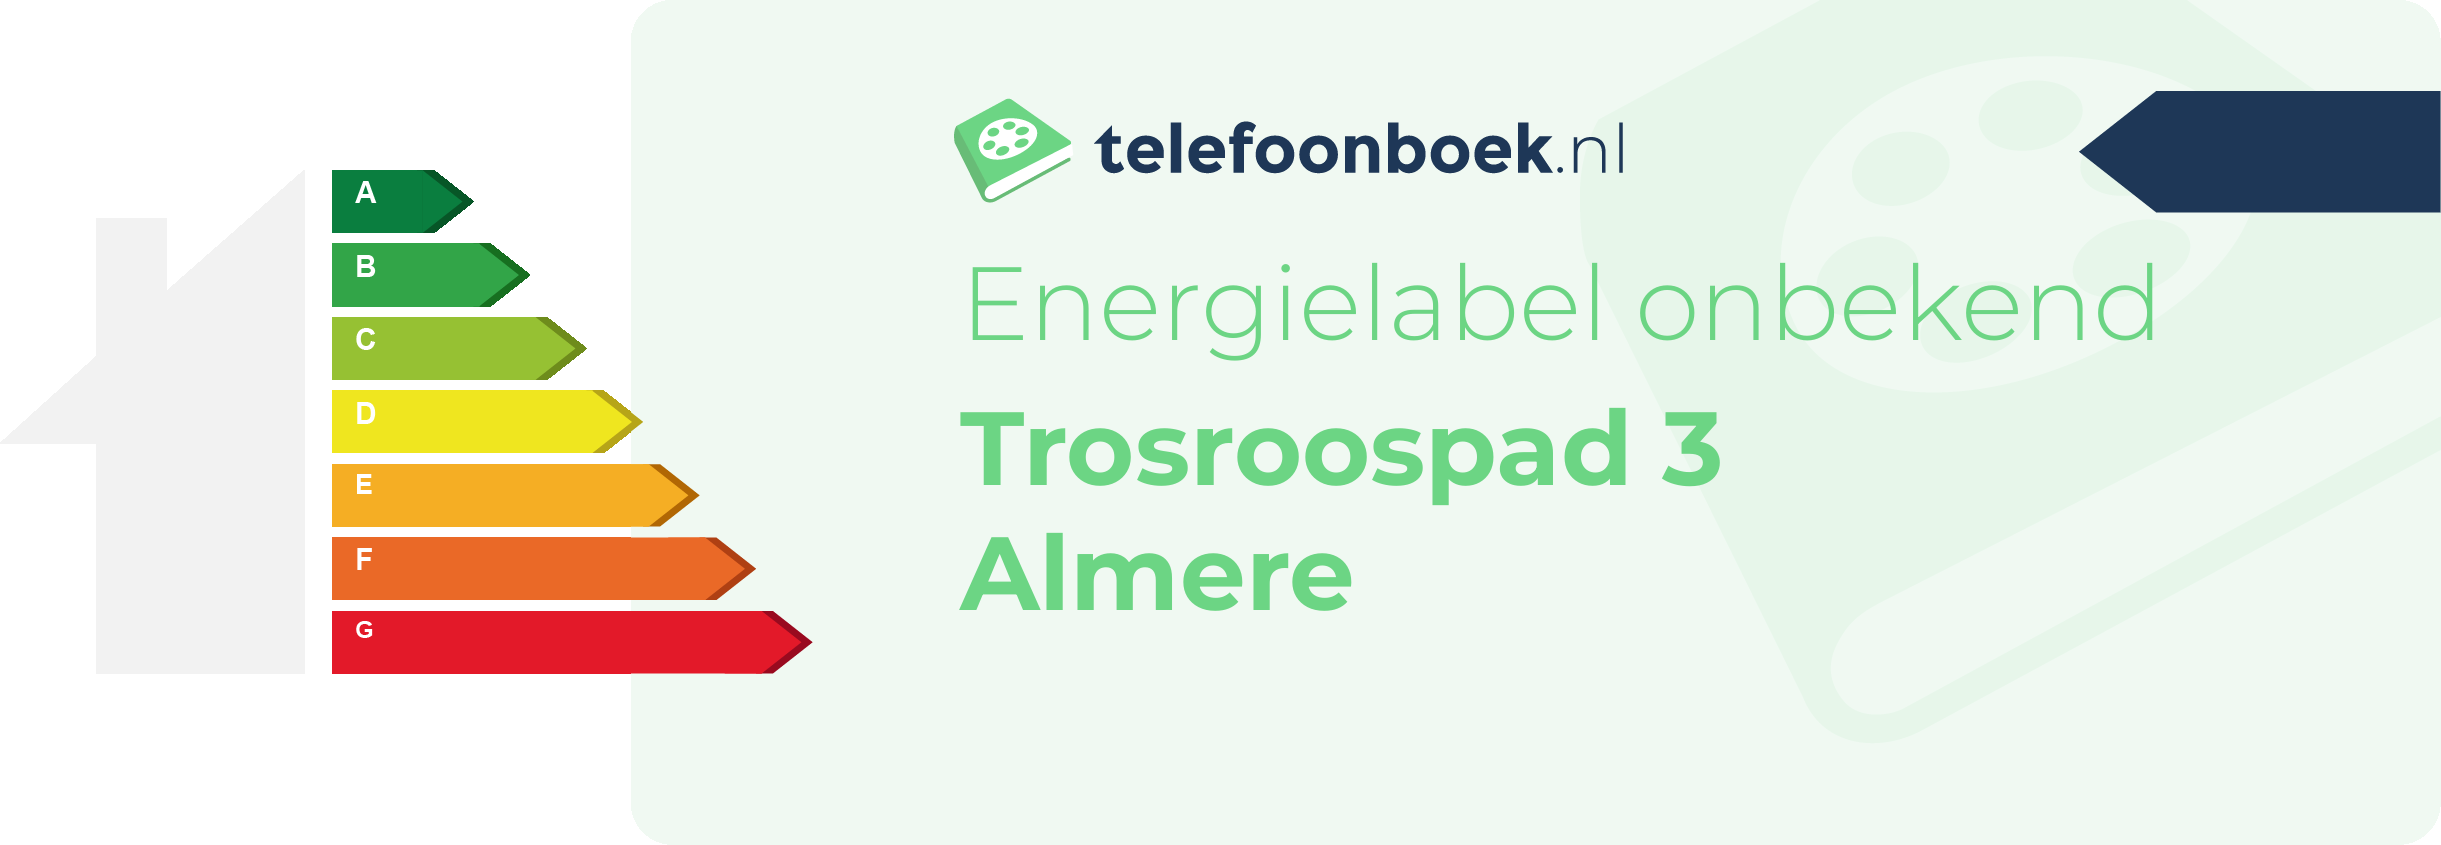 Energielabel Trosroospad 3 Almere